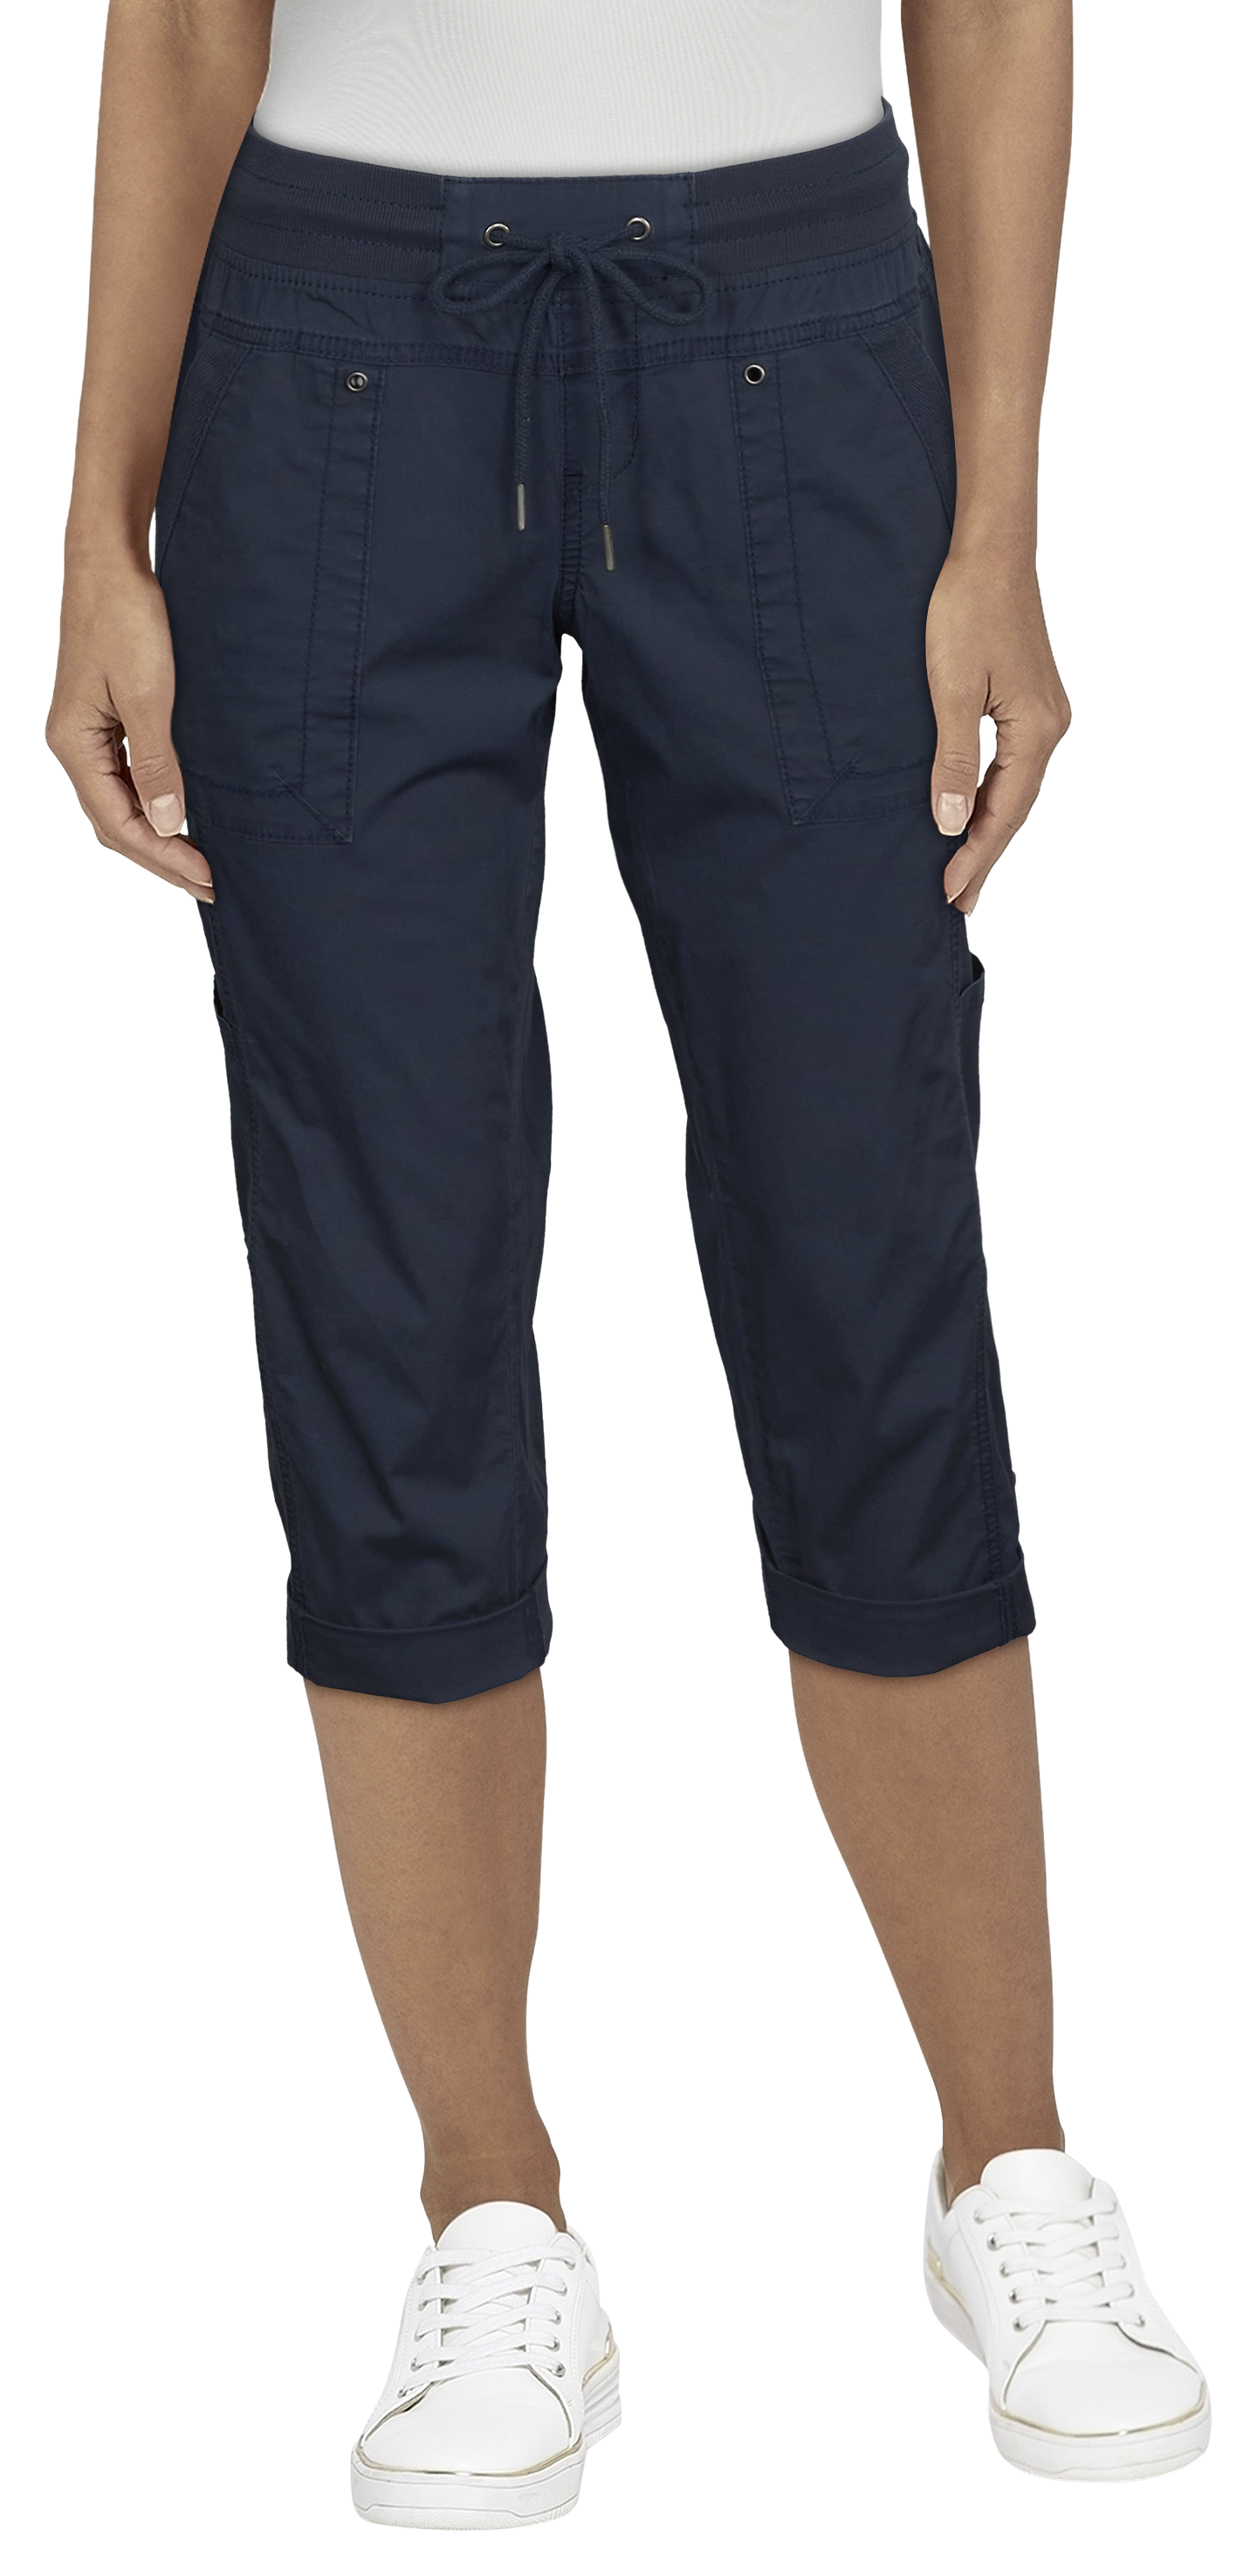 Style Dunes Women's Cotton Capri with Side Pockets - Stretch Pants for -  Wowxop